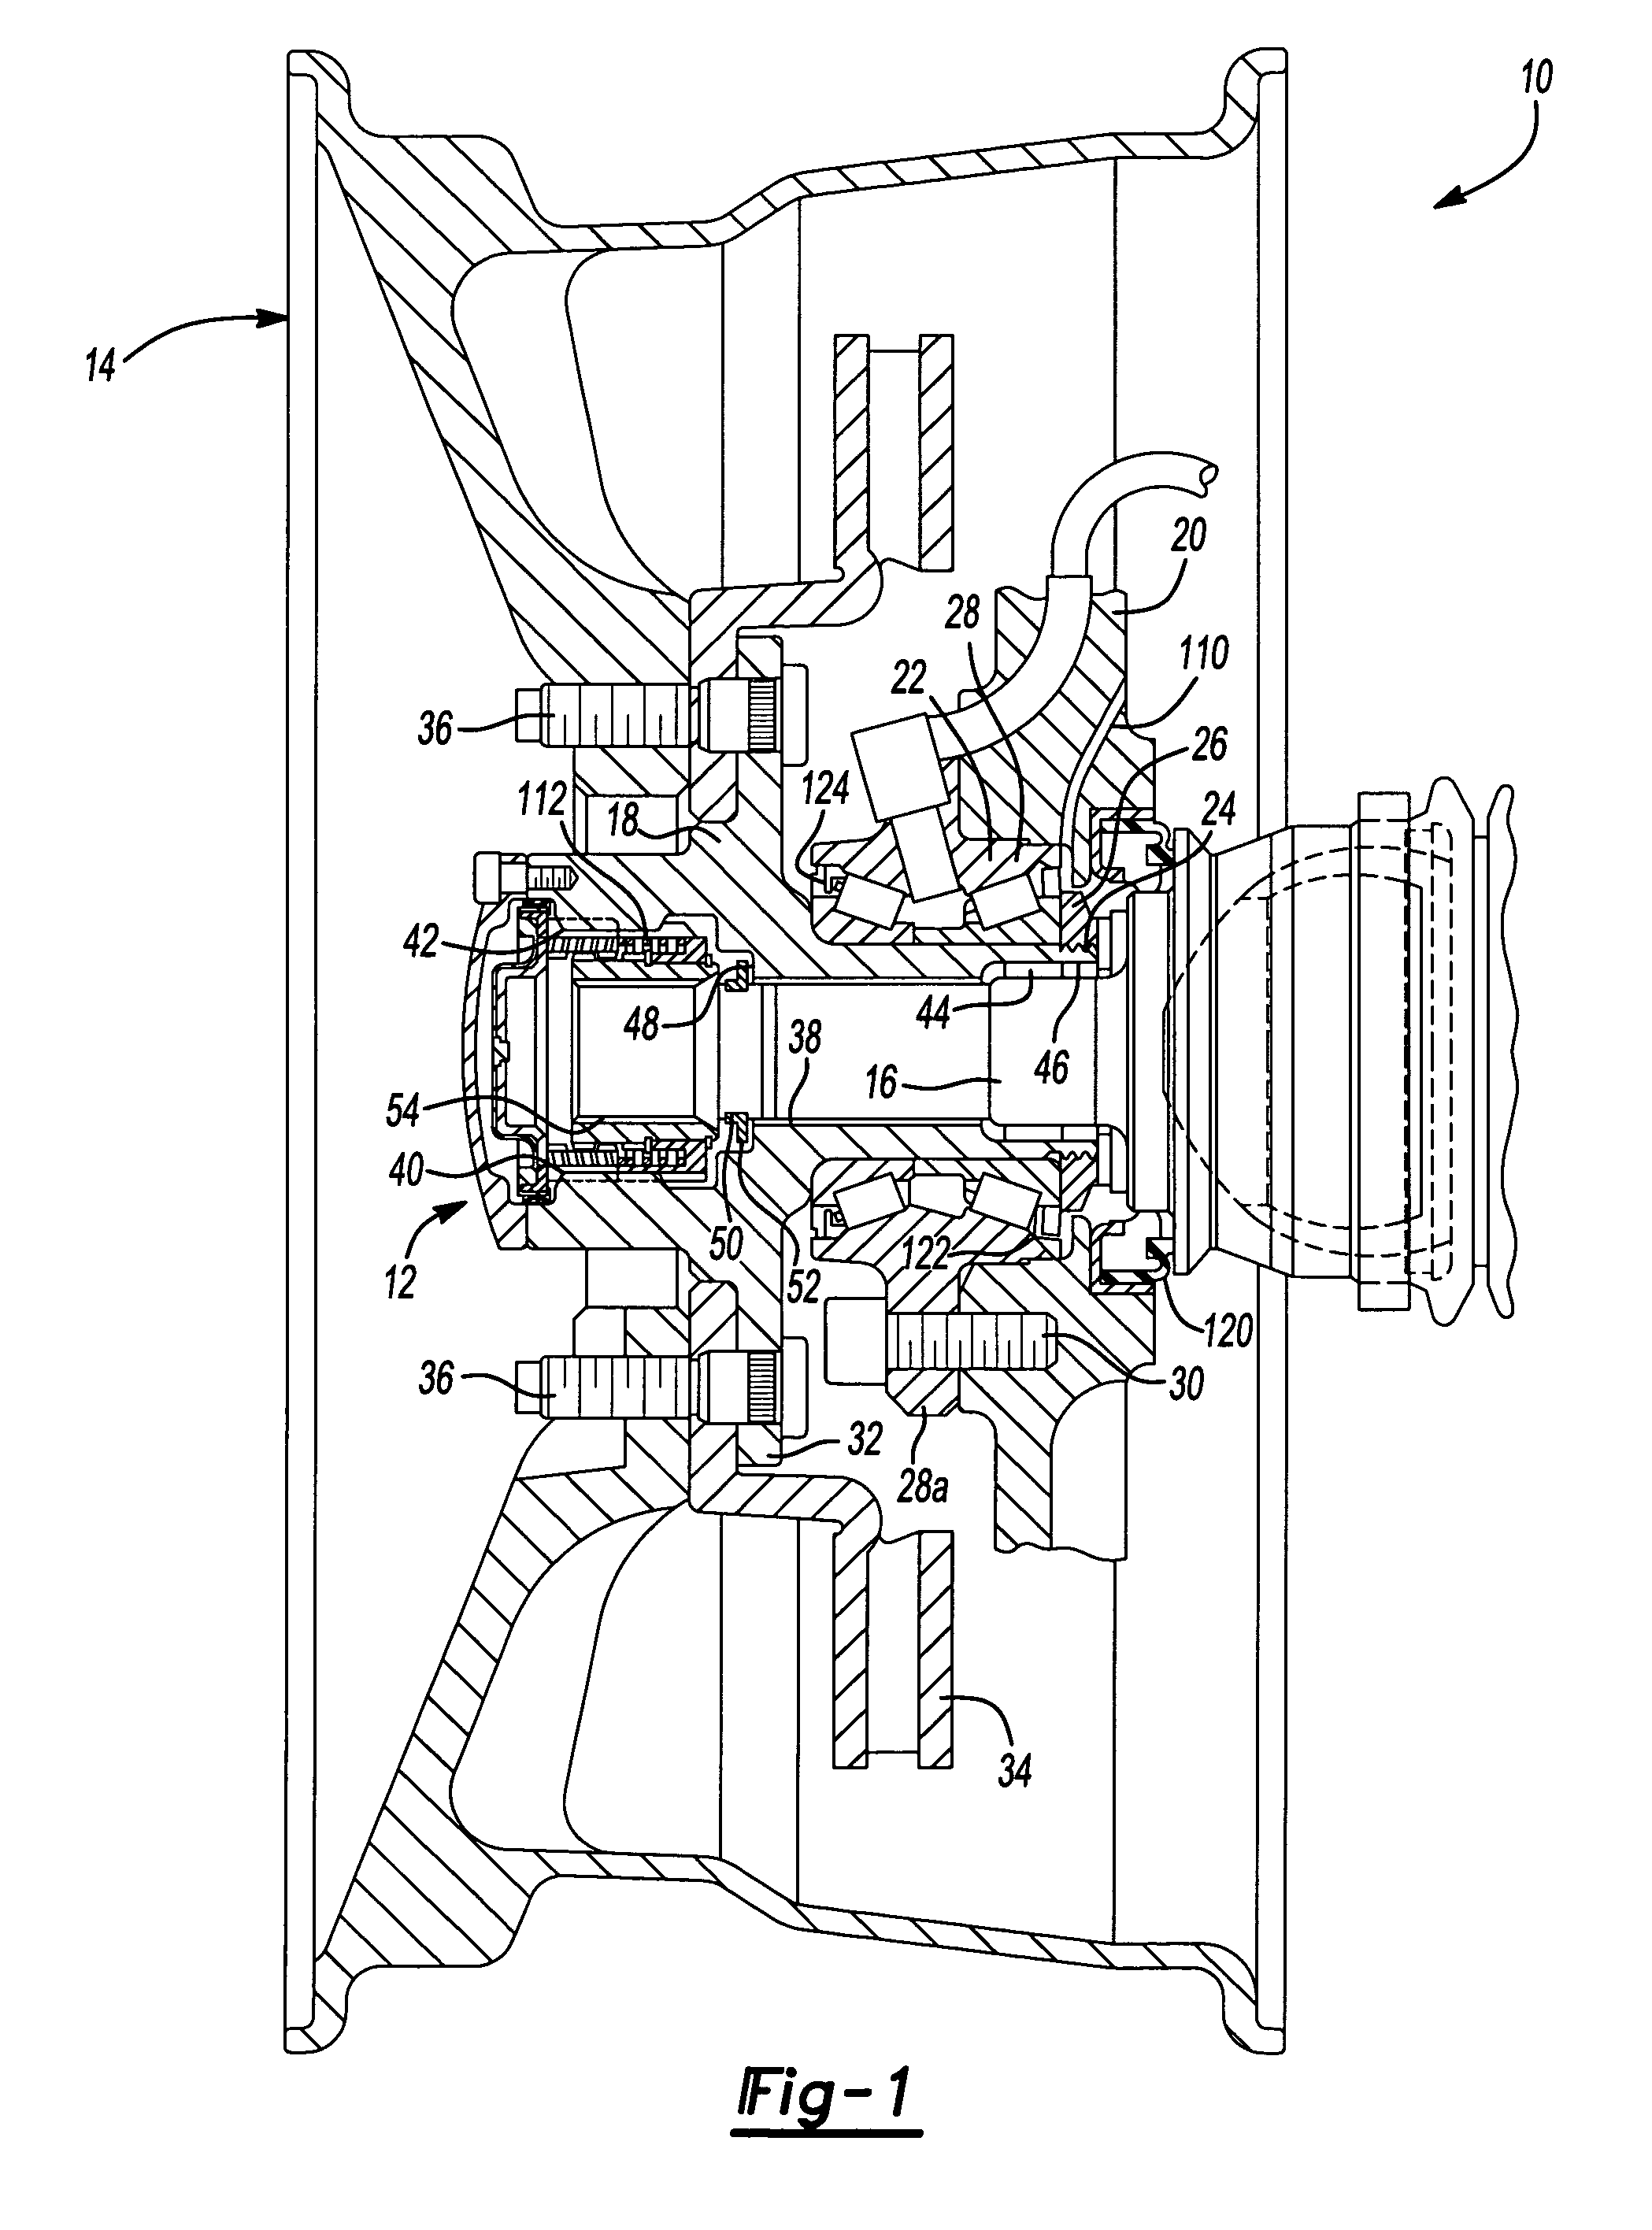 Vacuum locking hub cartridge for four wheel drive vehicle